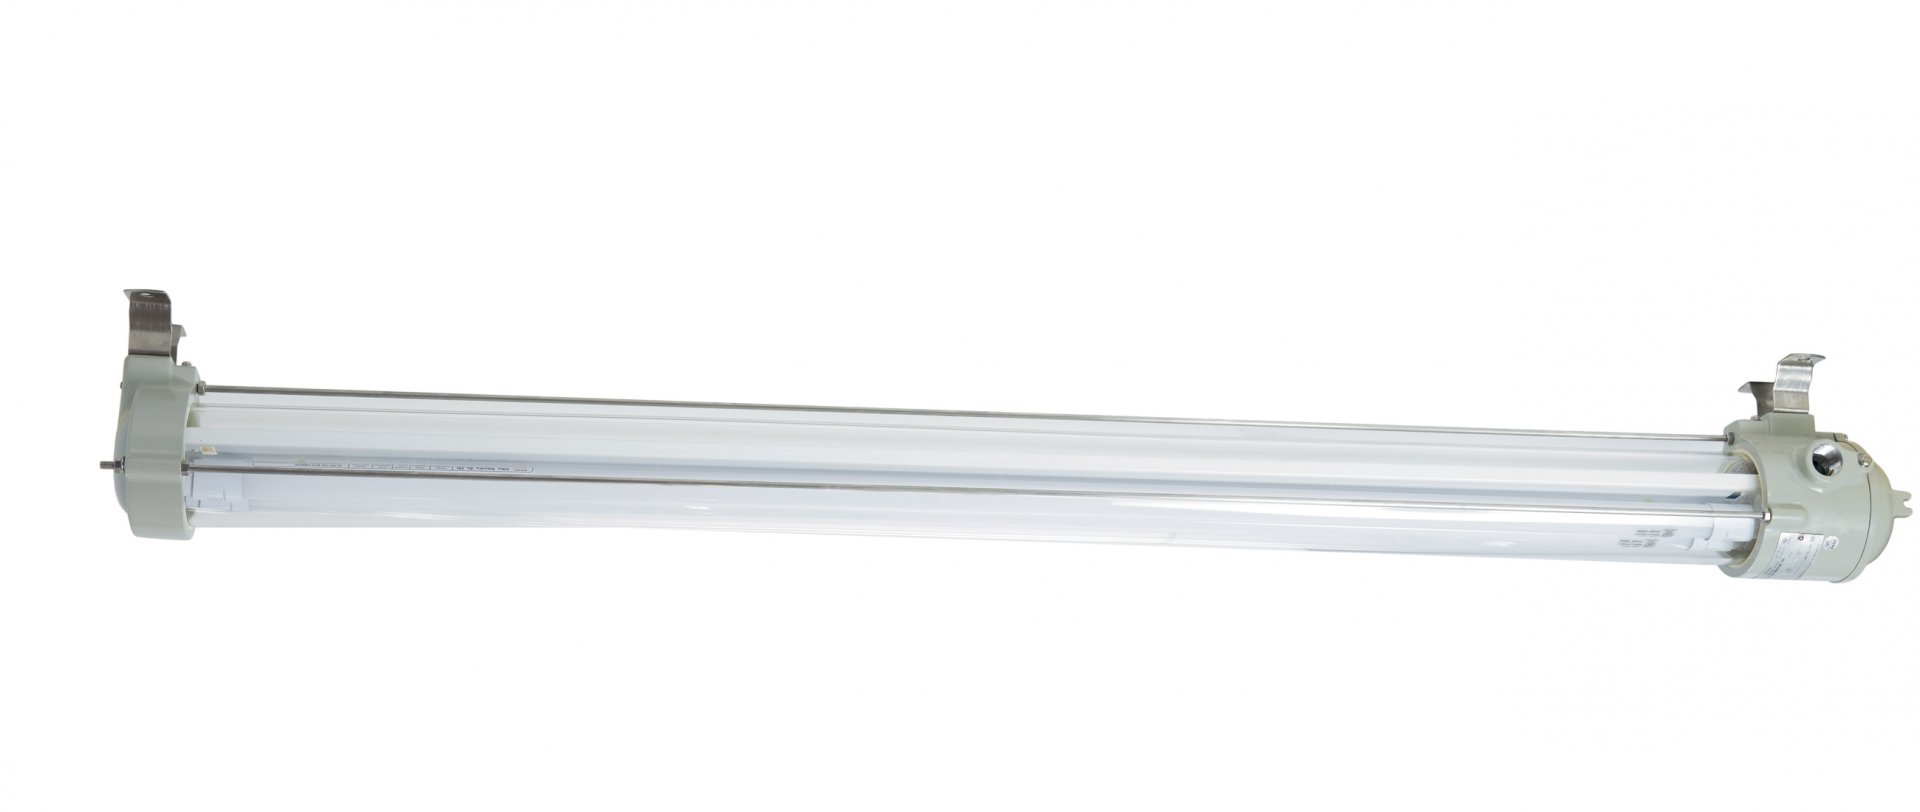 Fluorescent & LED Tube Lighting Fixture, DFP-S Series (Short end cap)